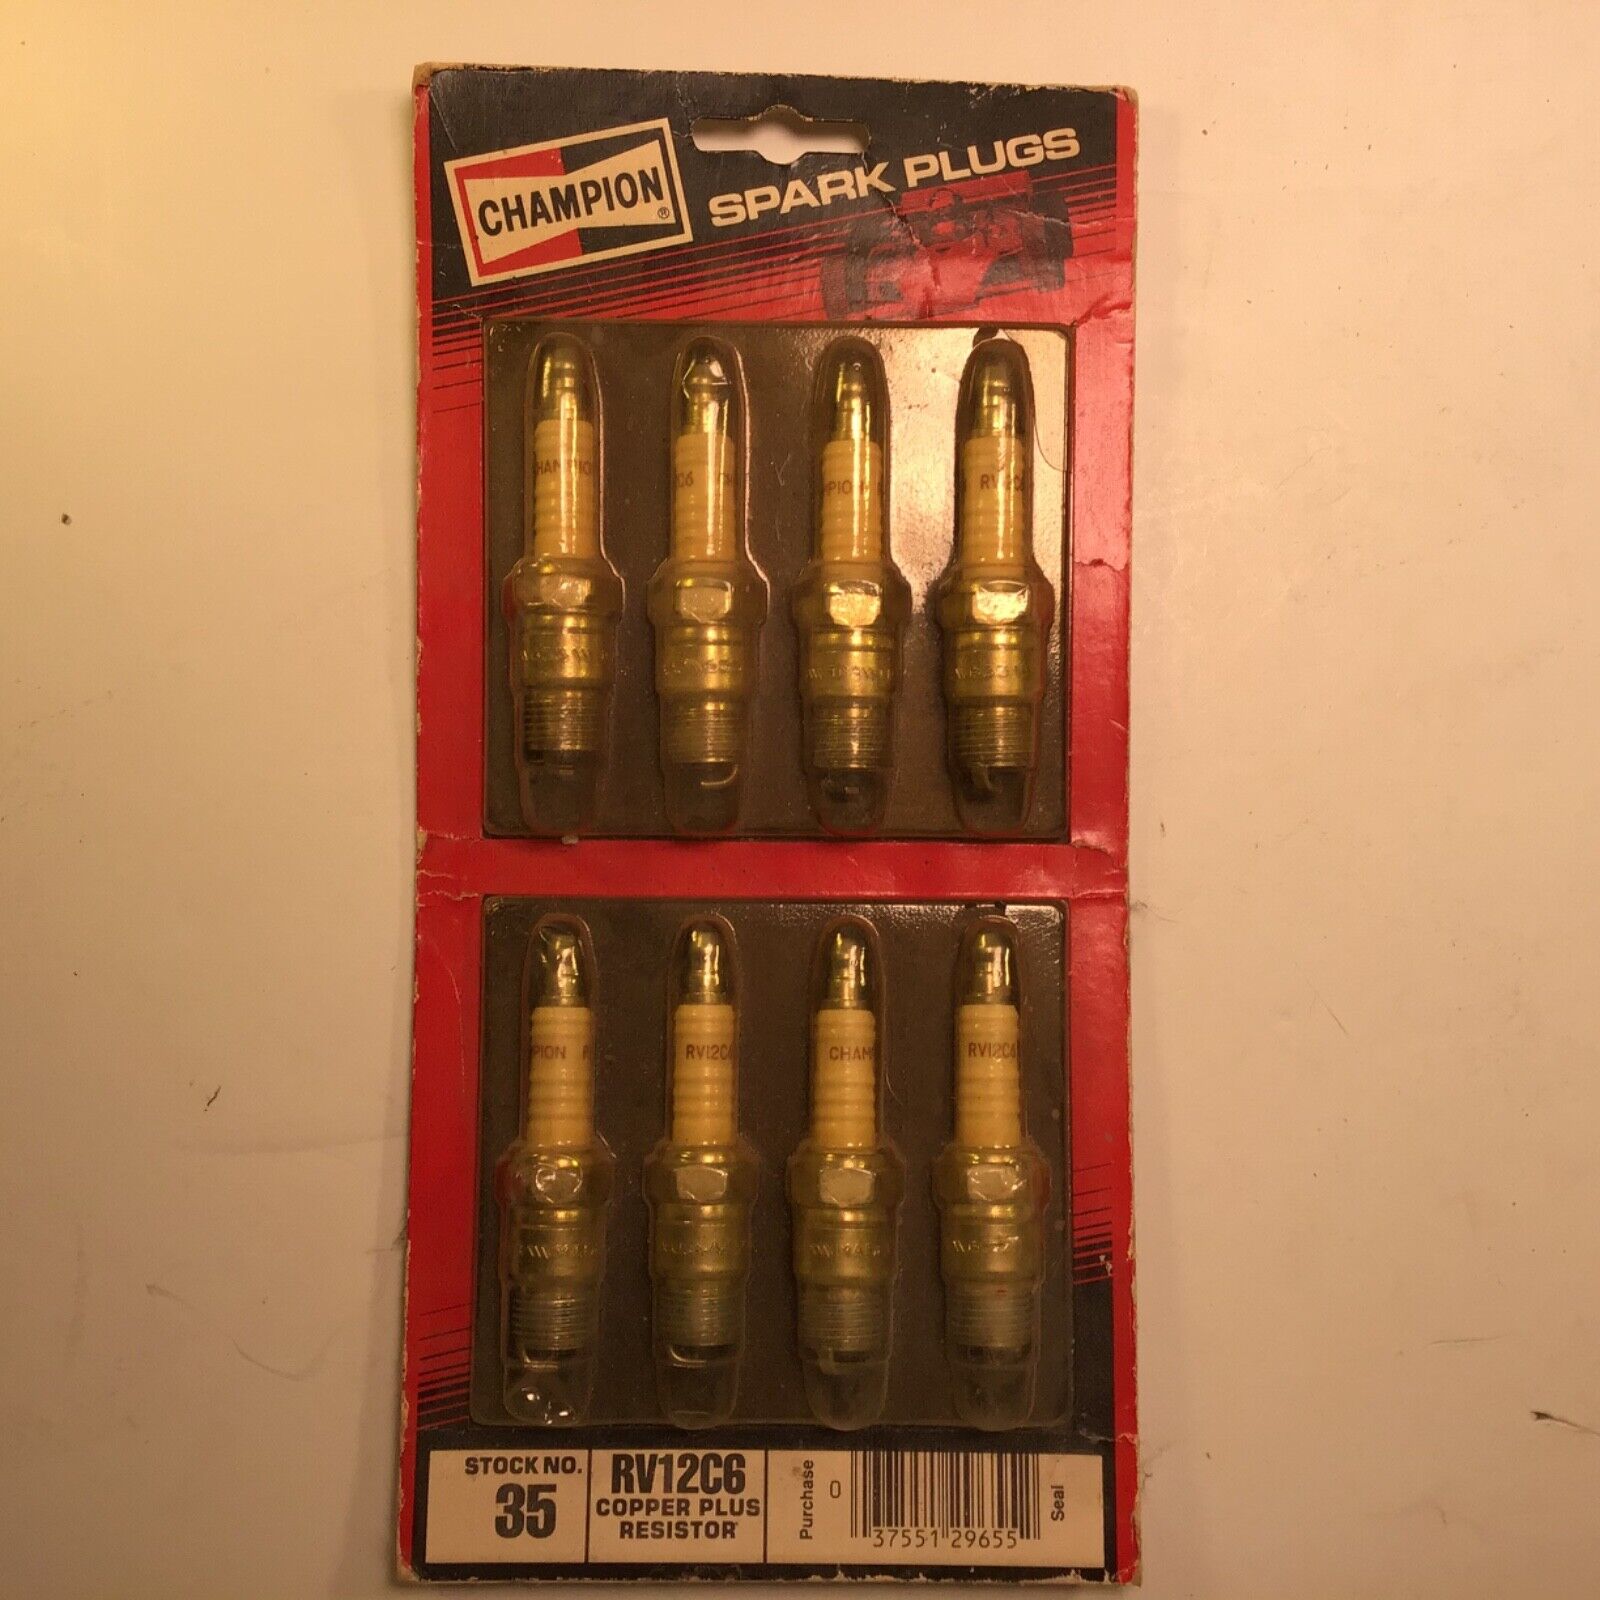 Champion 35/RV12C6 Spark Plugs-8 Pack Copper Plus Resistor Still in Blister Pack